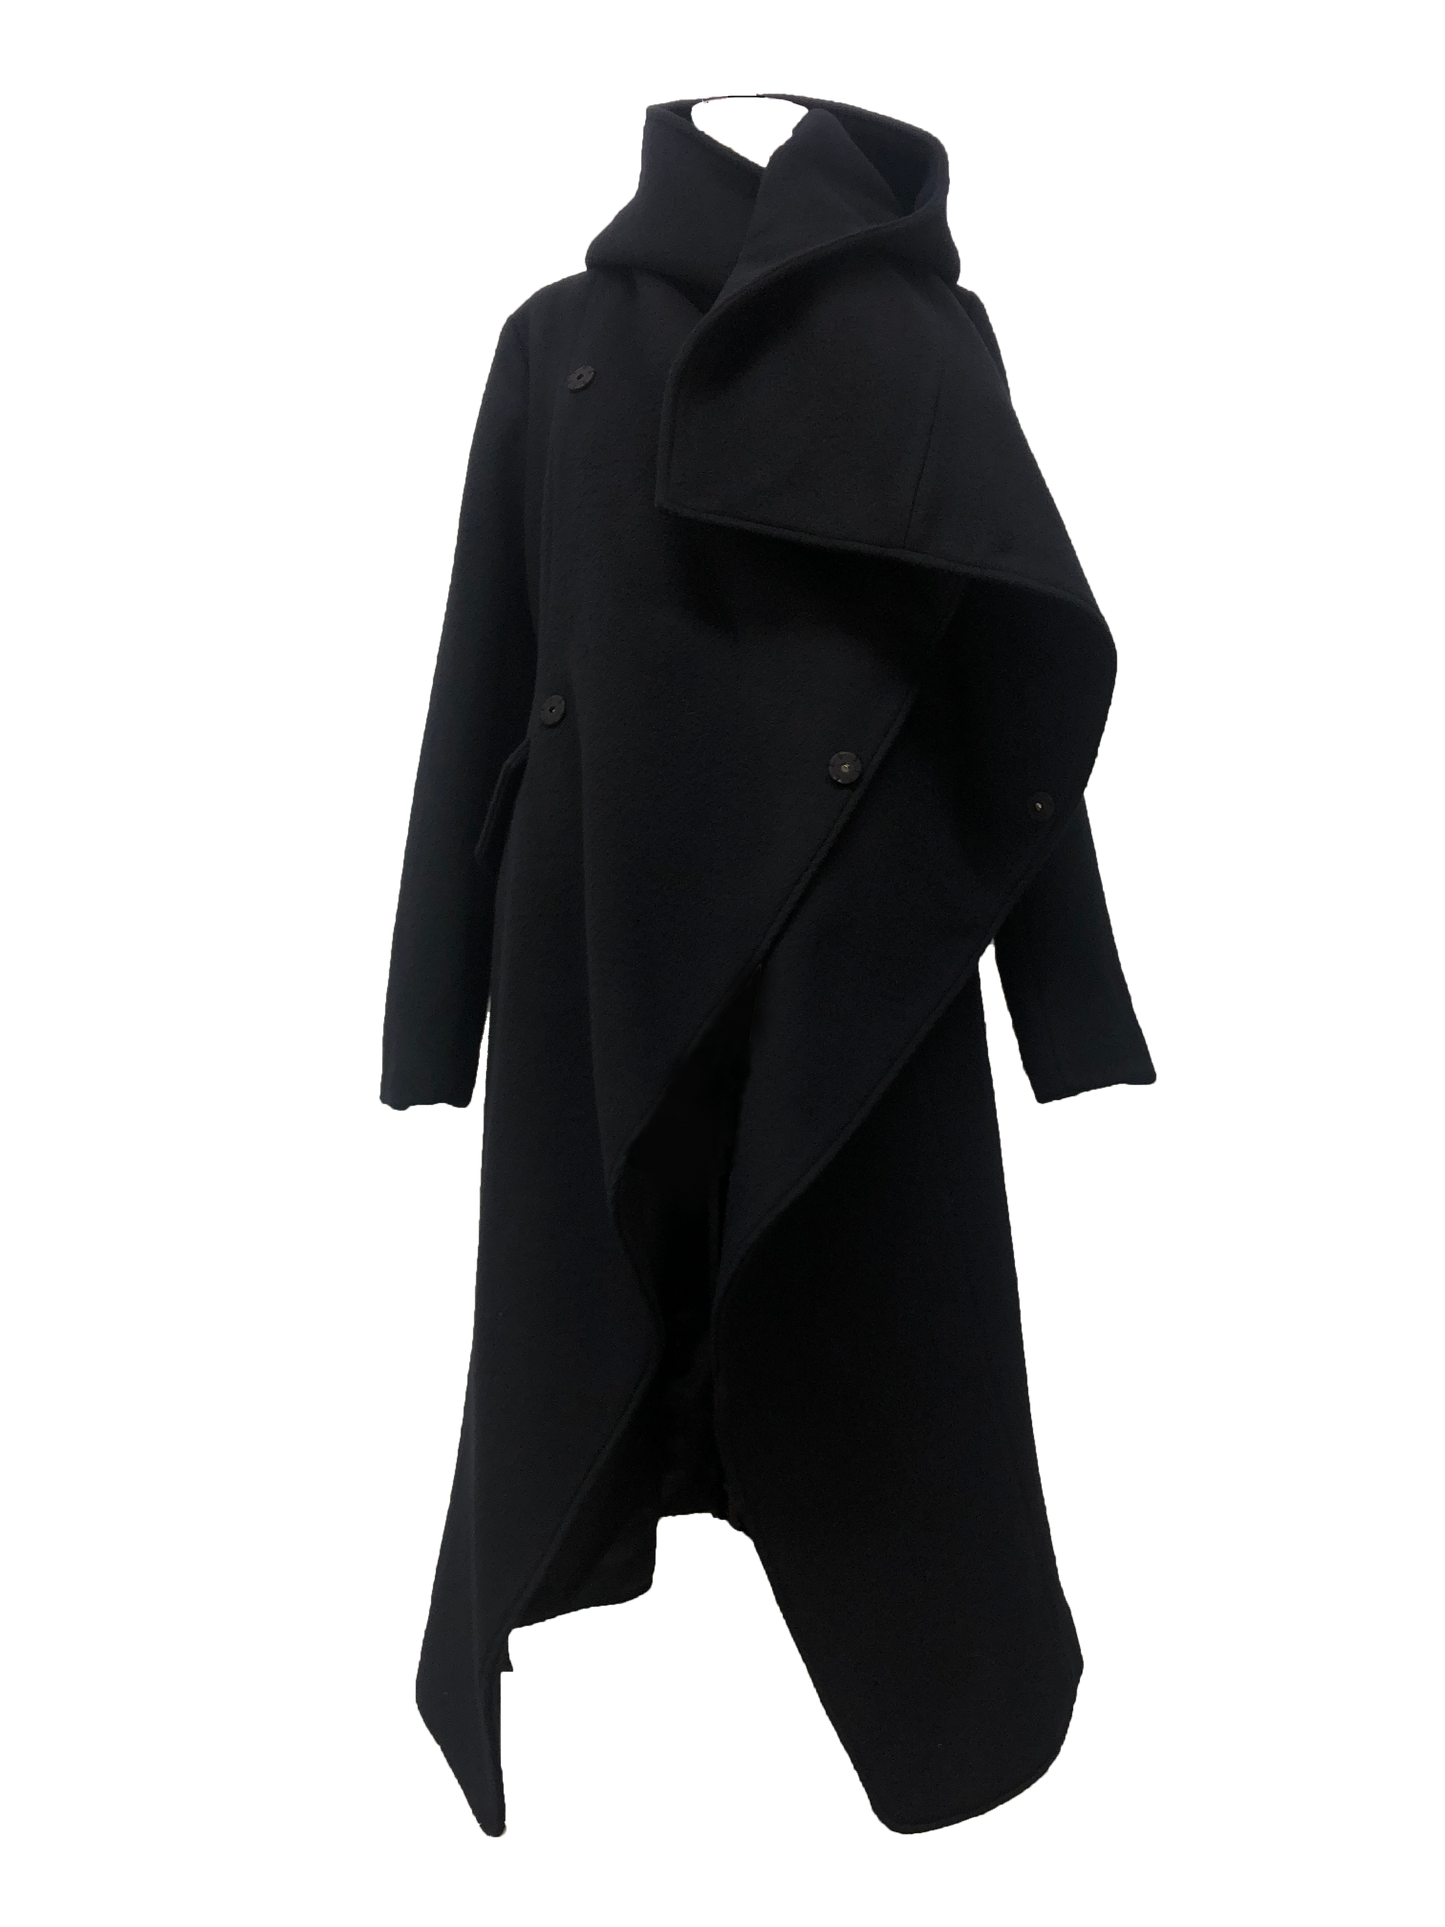 Medium length Black Coat with a hood alongside metal clip closures 